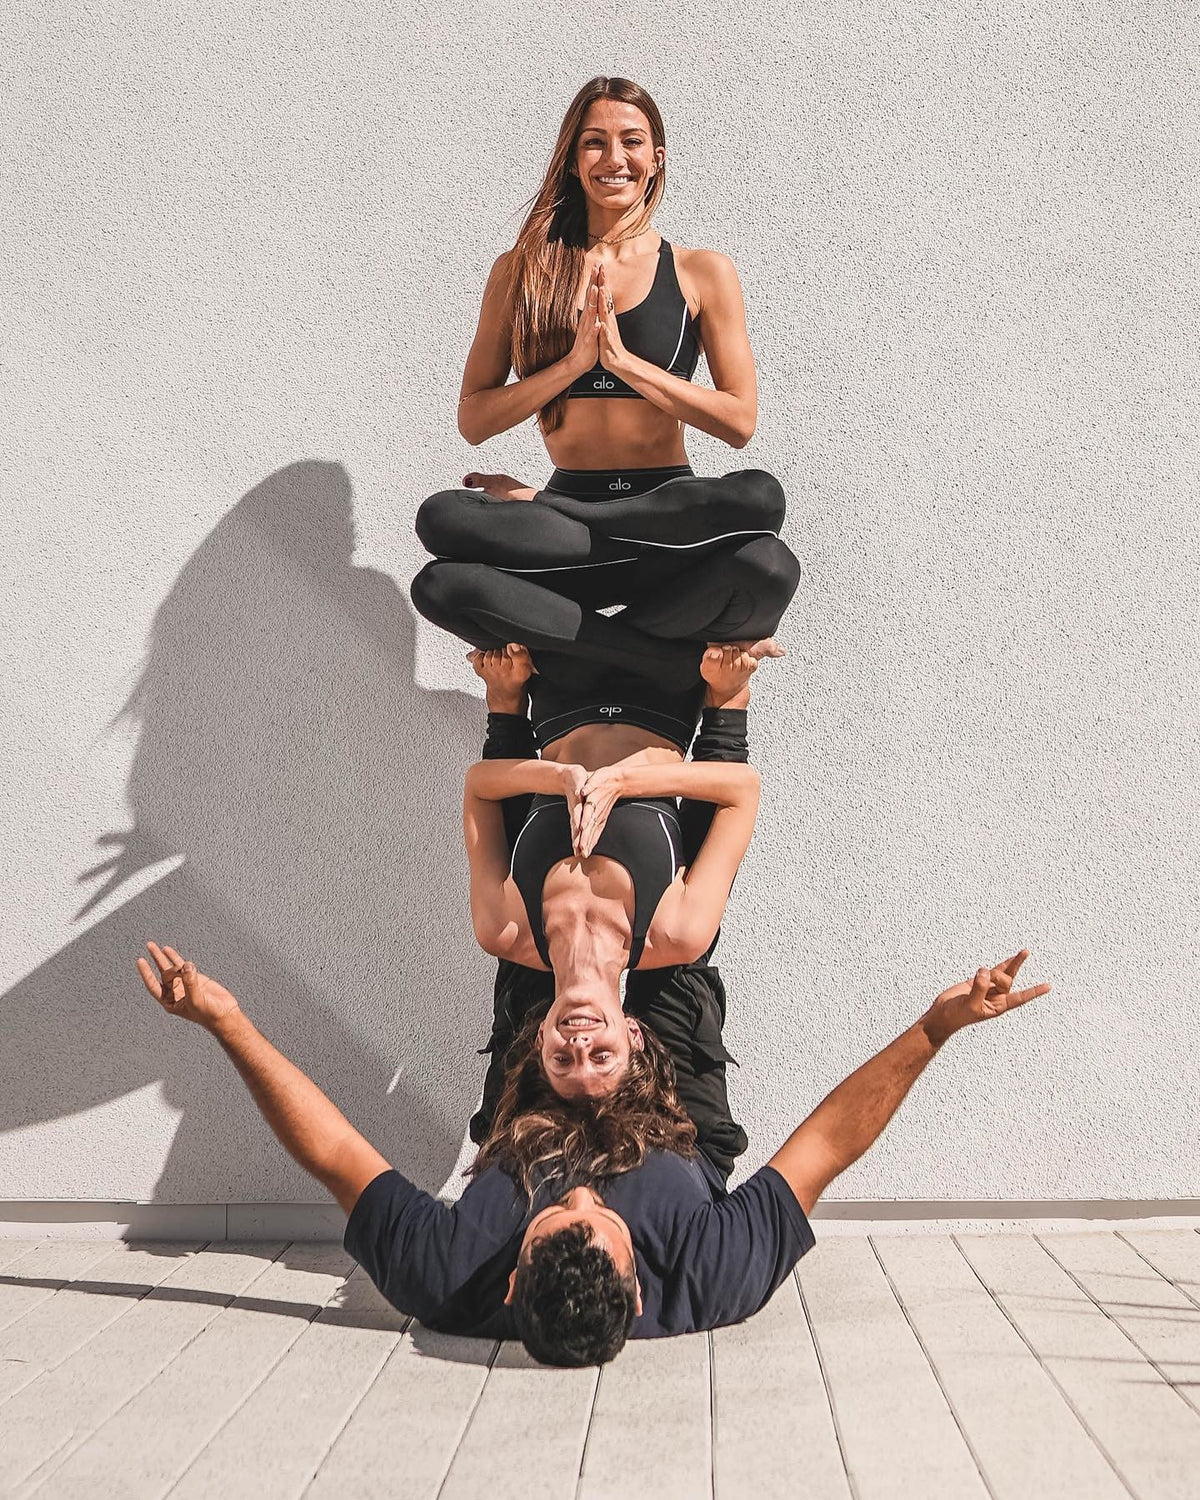 @tawnyjanae @acrowithjon and @ itscaitlinturner performing acro yoga wearing all black yoga Alo sets.  